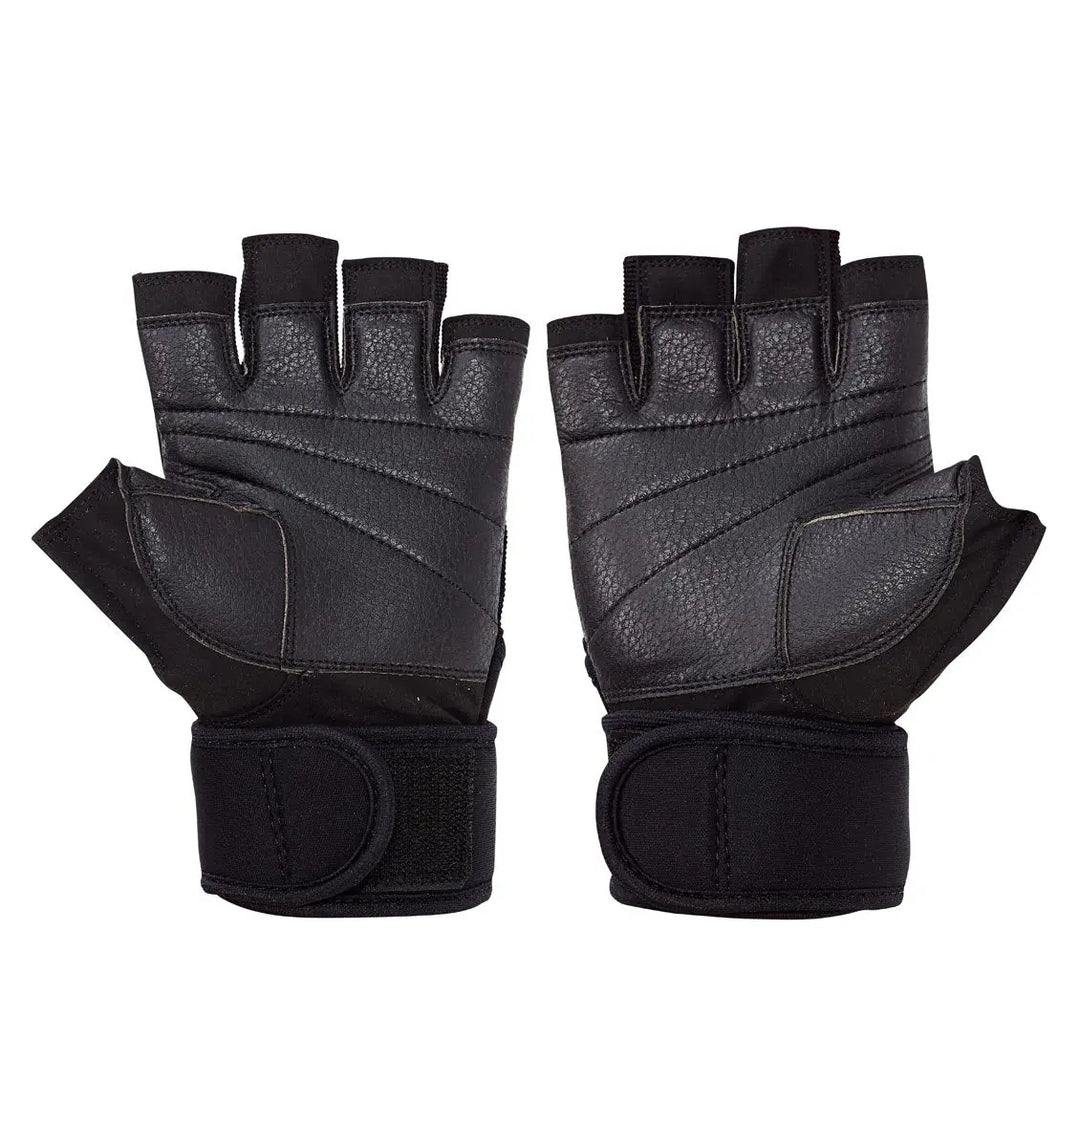 Model 540 Lifting Gloves with Wrist Wraps - Schiek Sports